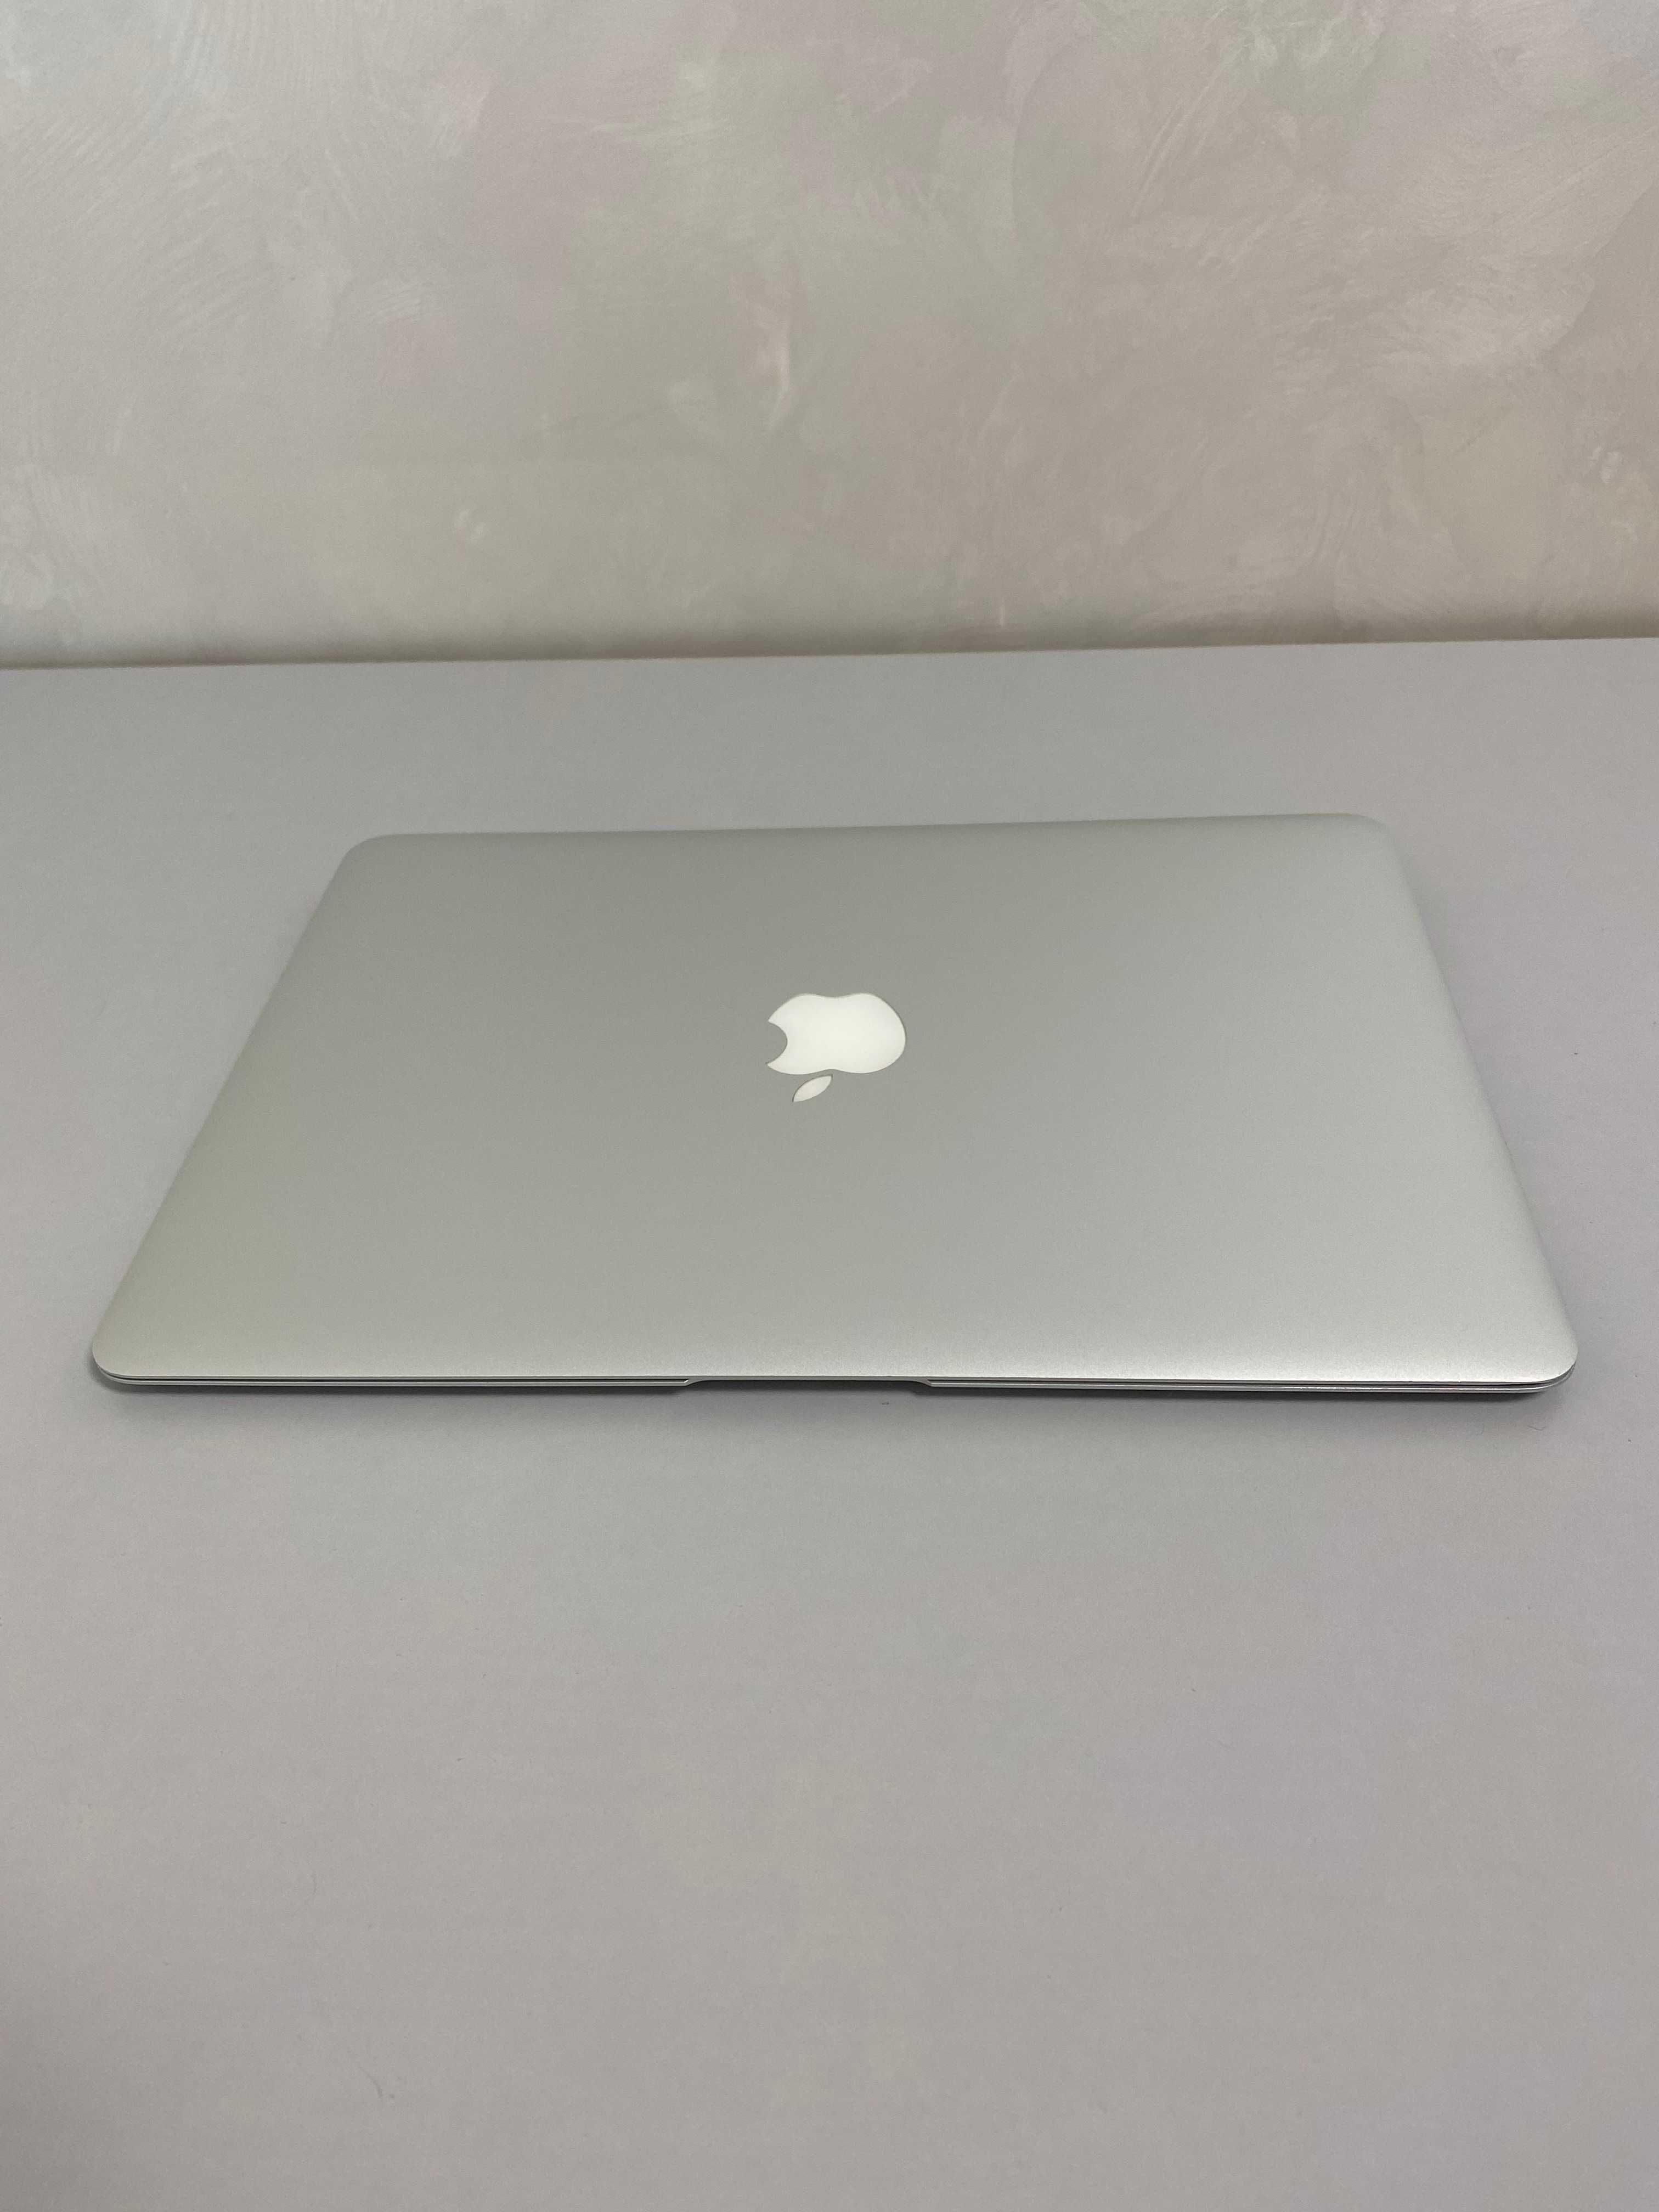 Apple MacBook Air 13 (A1466, 2015 год, i5, 256 ssd, 4 ram)